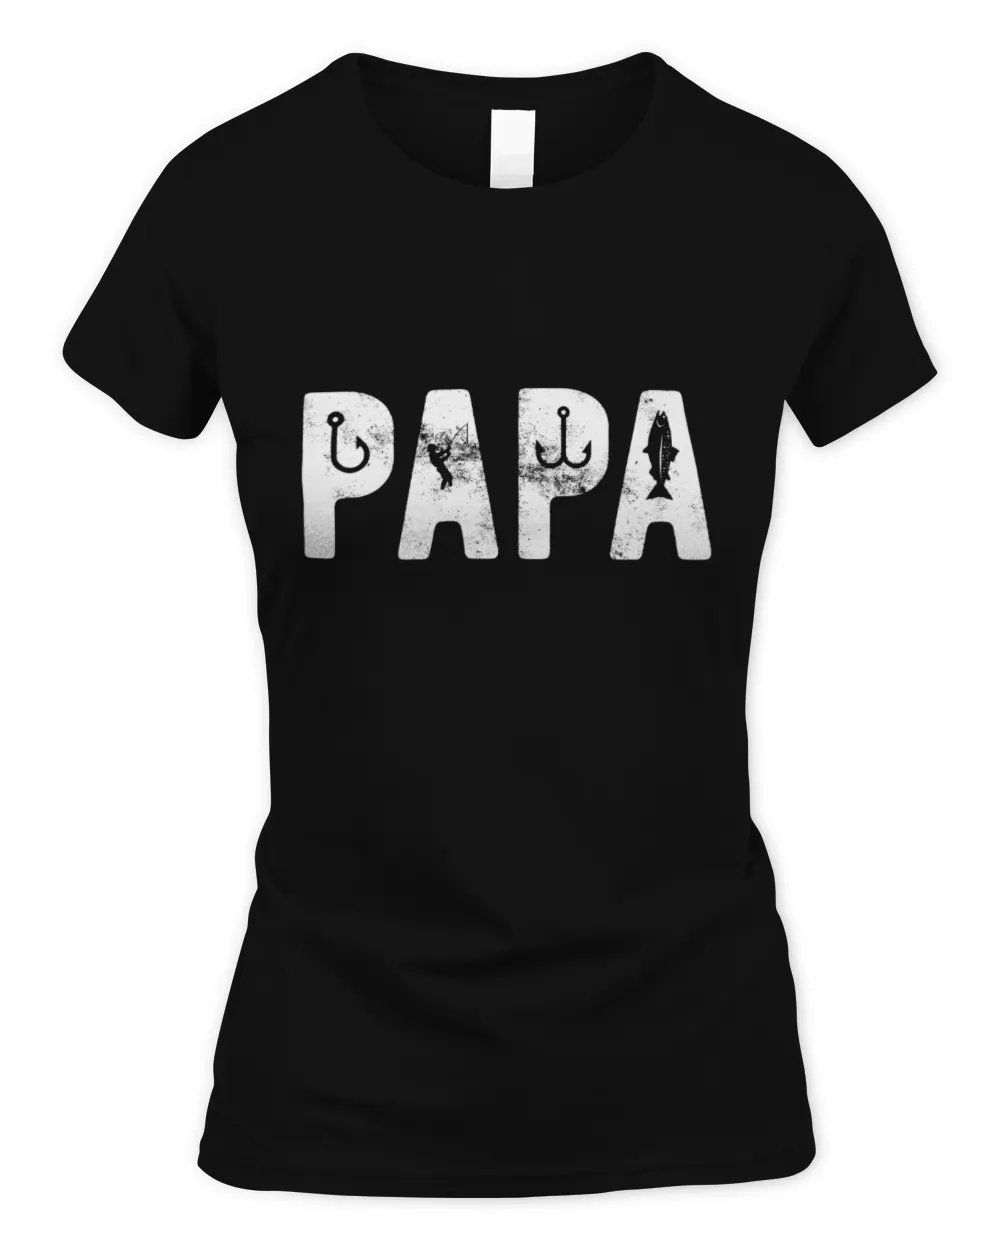 Papa Fishing T shirt, Funny Fishing Shirt, Fishing Graphic Tee, Fisherman Gifts, Present For fisherman, Father's Day Gifts, PAPA Fishing